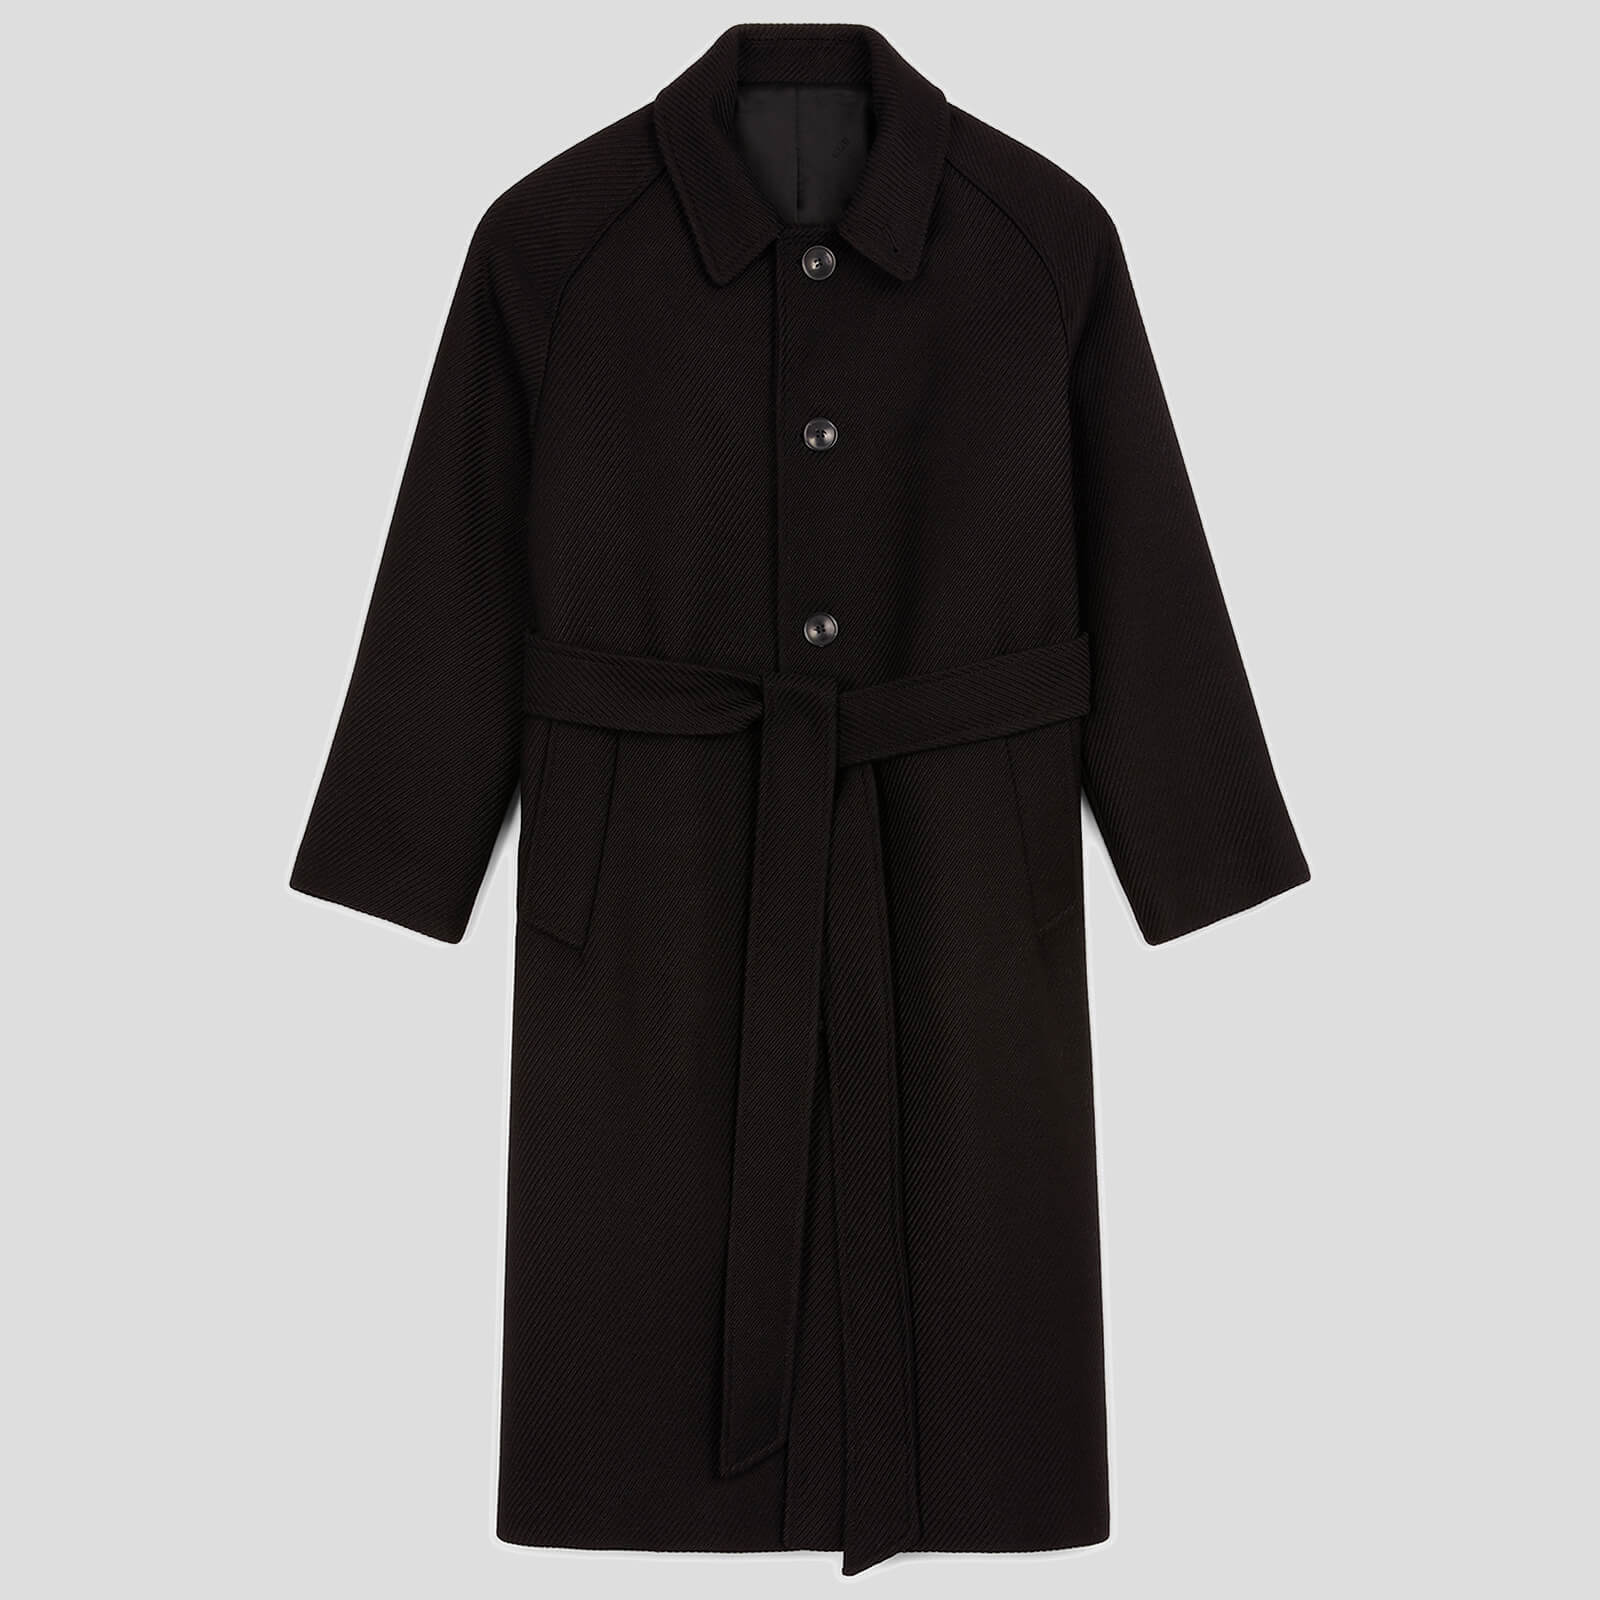 AMI Women's Classic Coat - Black - FR 36/UK 8